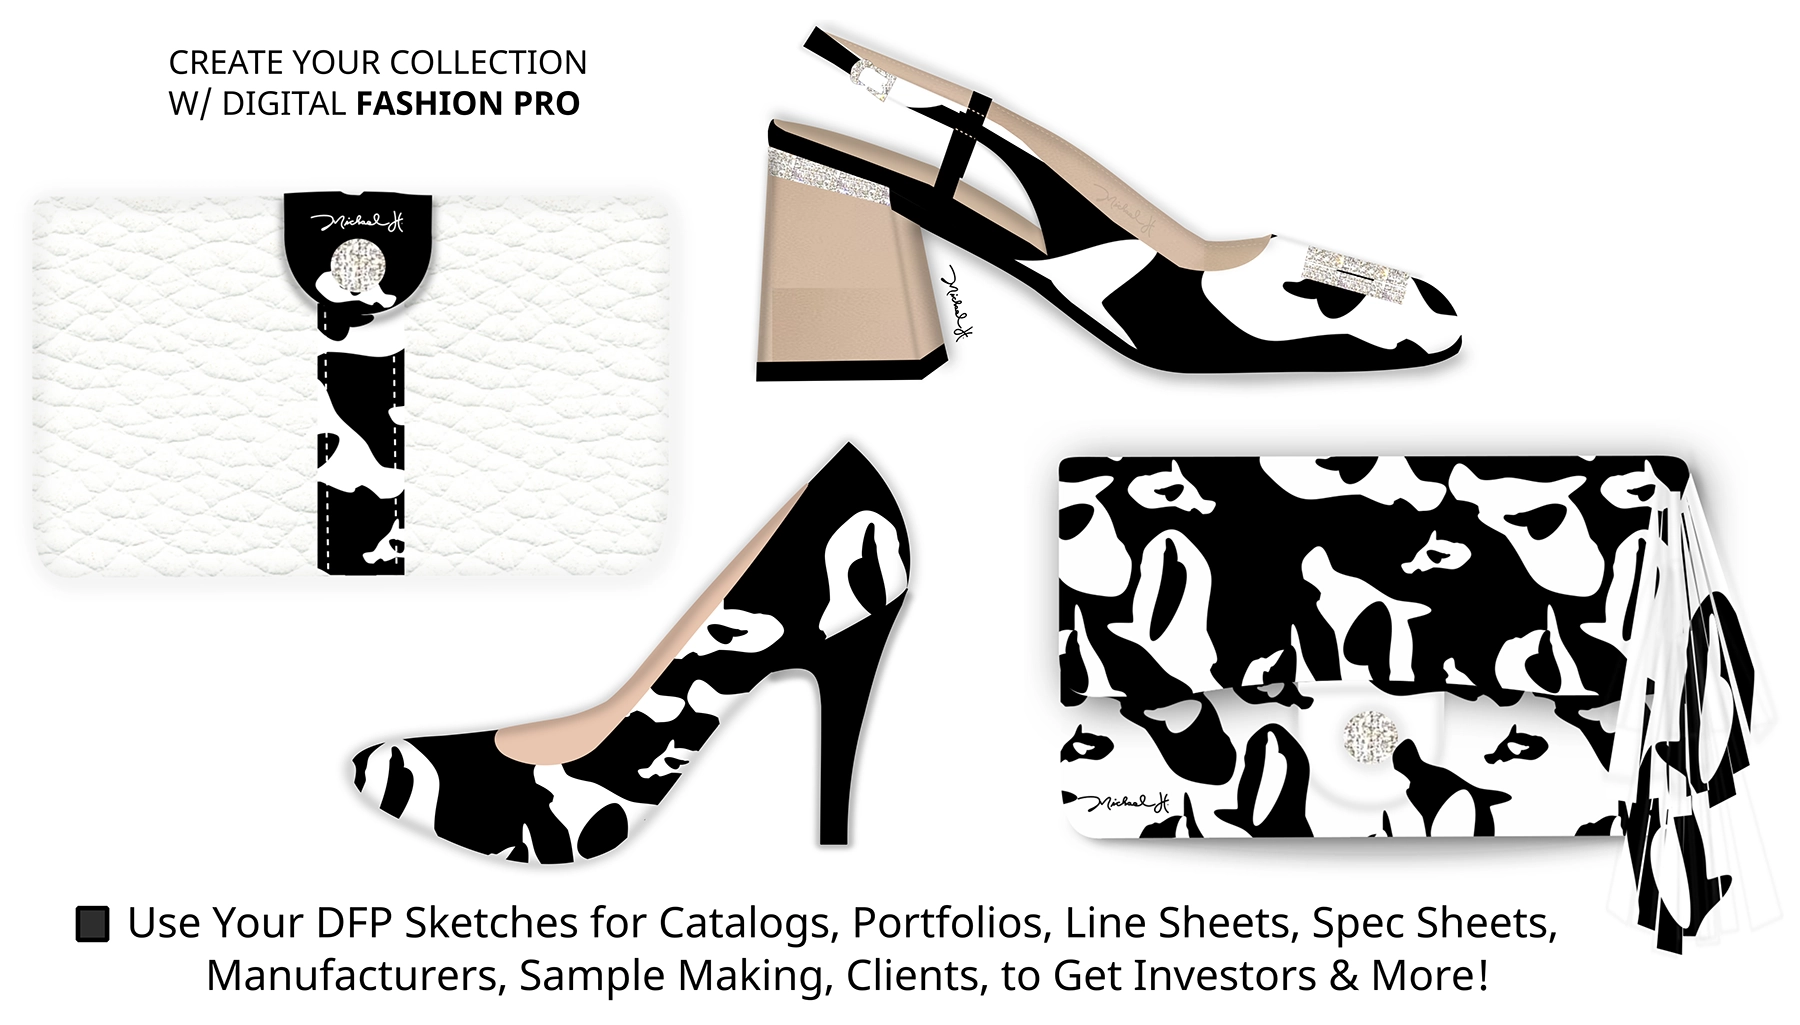 Sketch - fashion design handbag and heels